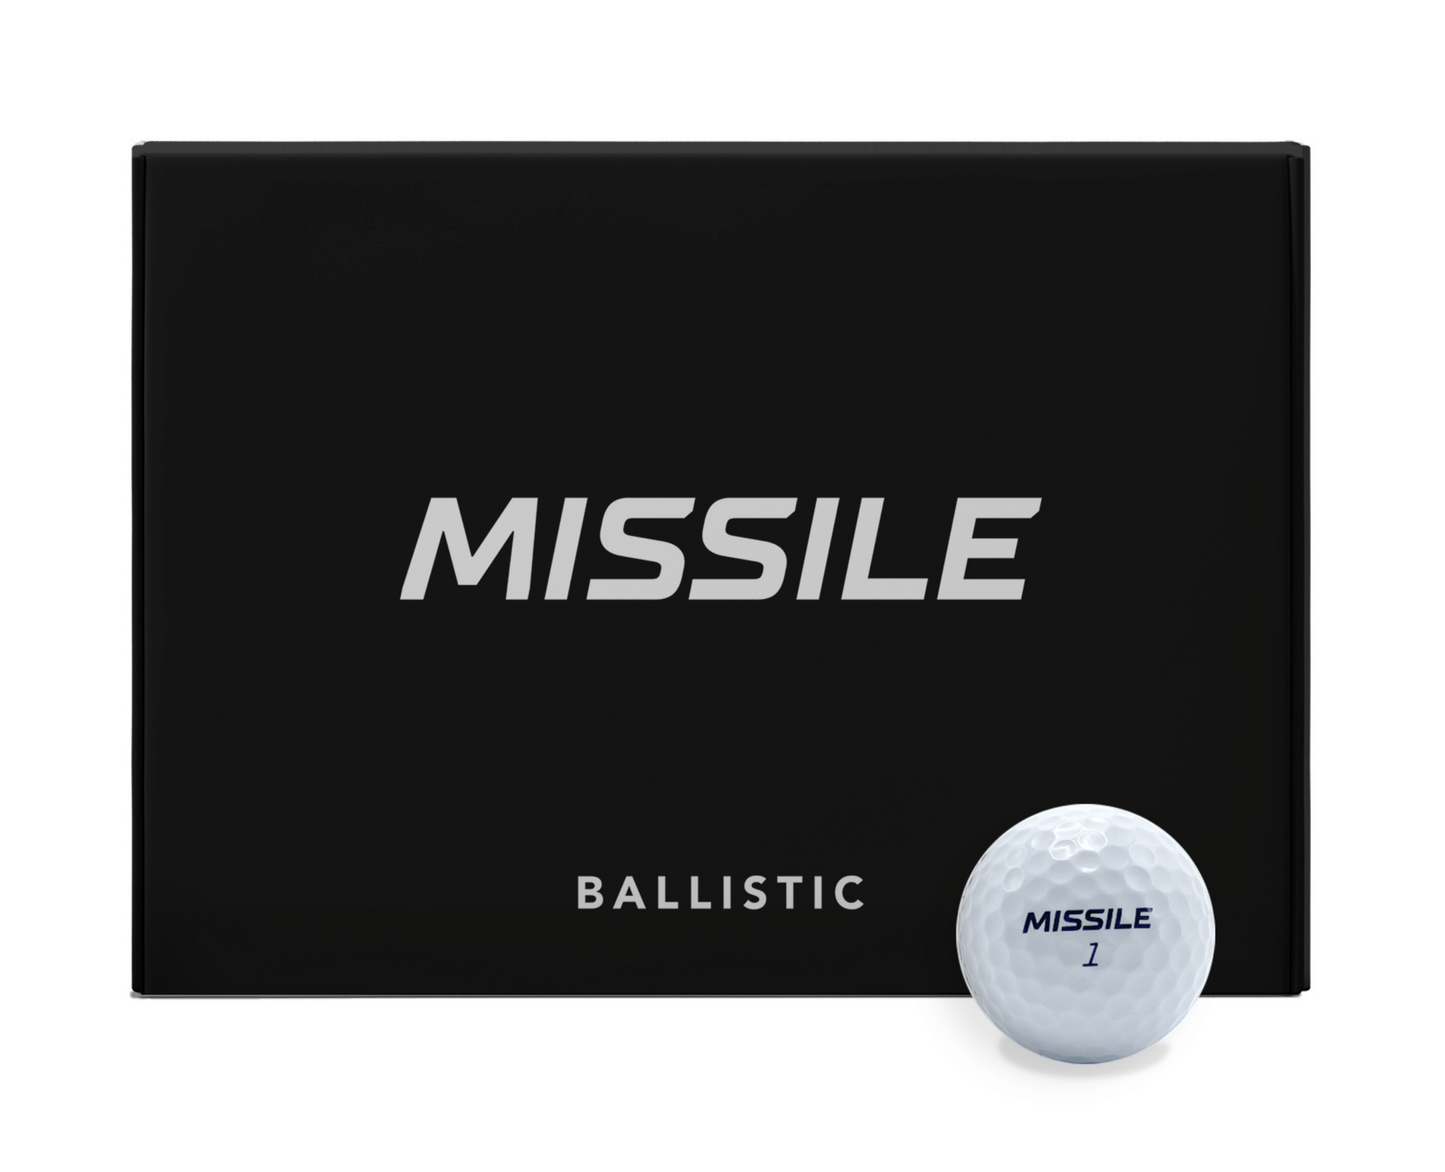 The BALLISTIC Missile